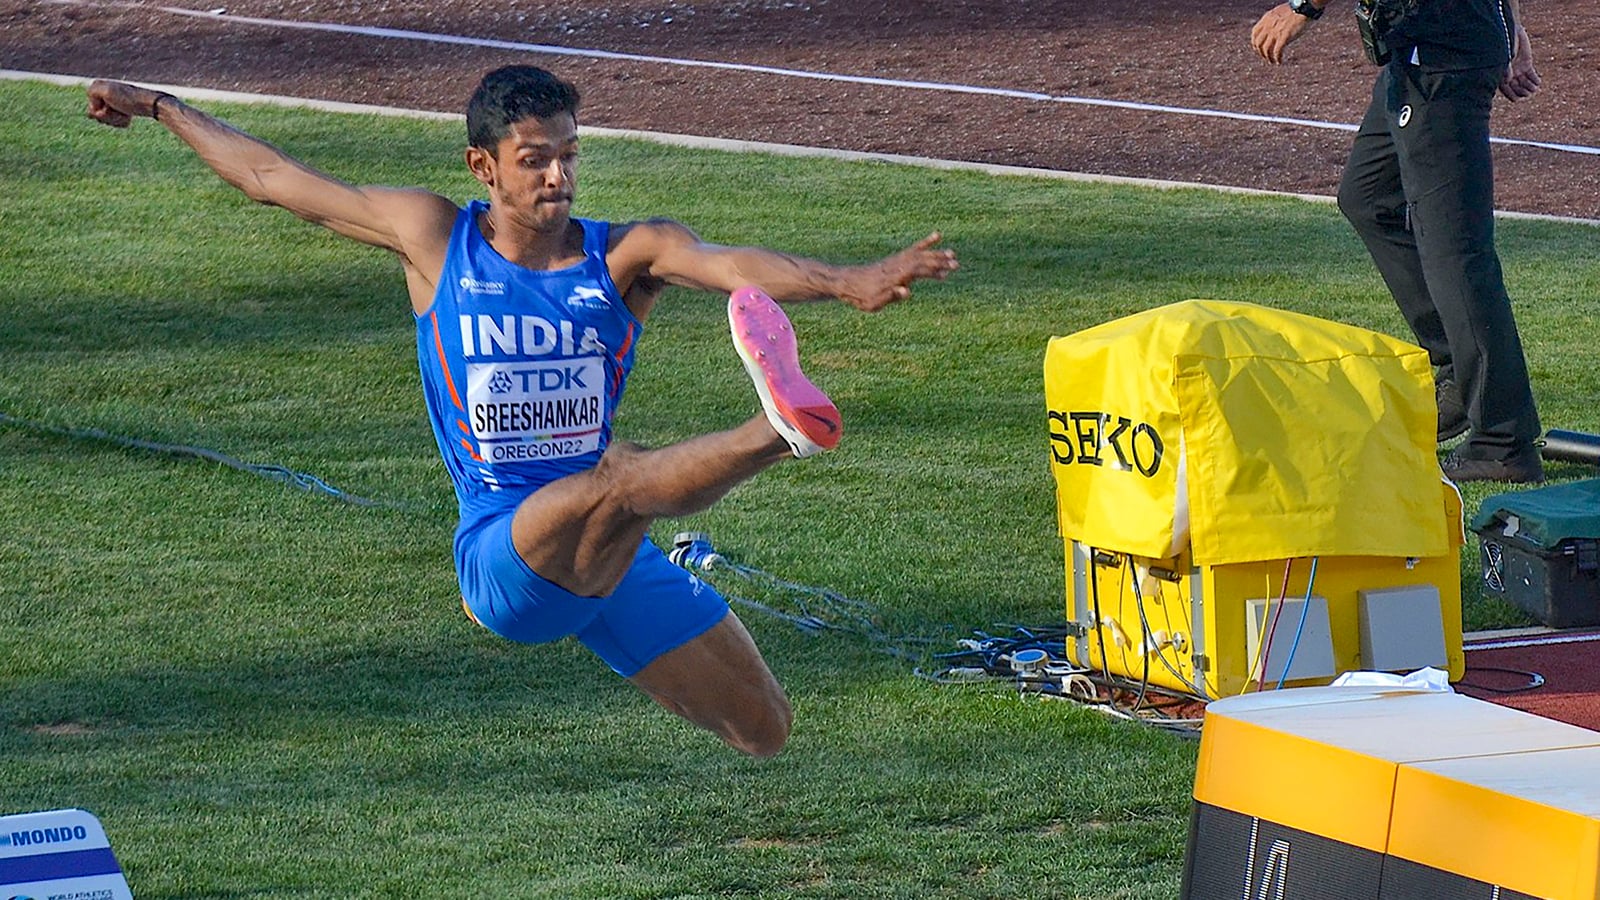 Murali Sreeshankar flops in final, Wang snatches gold with last leap -  Hindustan Times